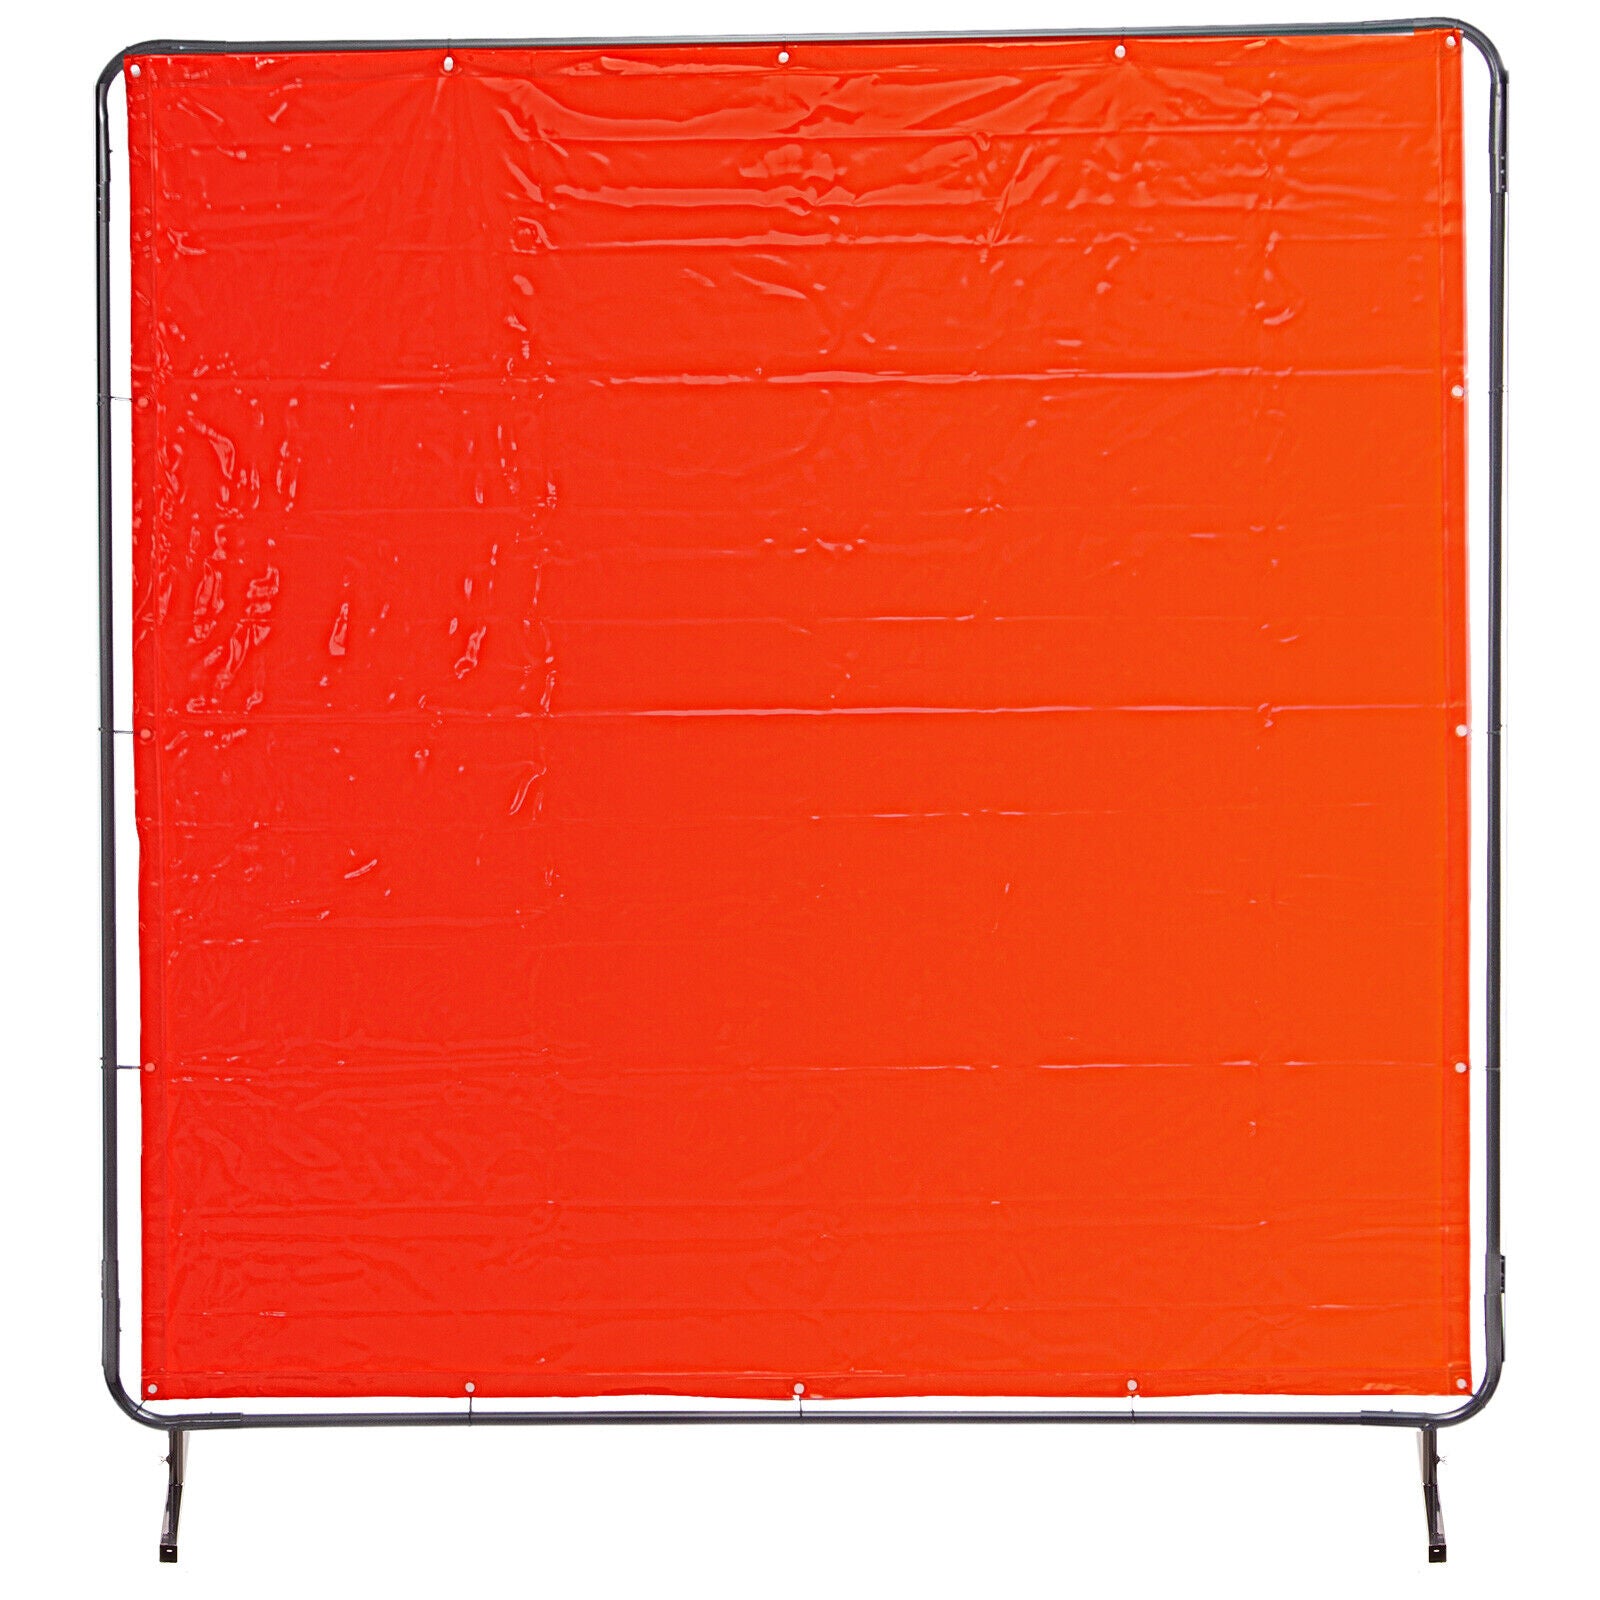 3 Panel 1.83 x 1.83 m Flame Retardant Welding Screen Welding Curtain